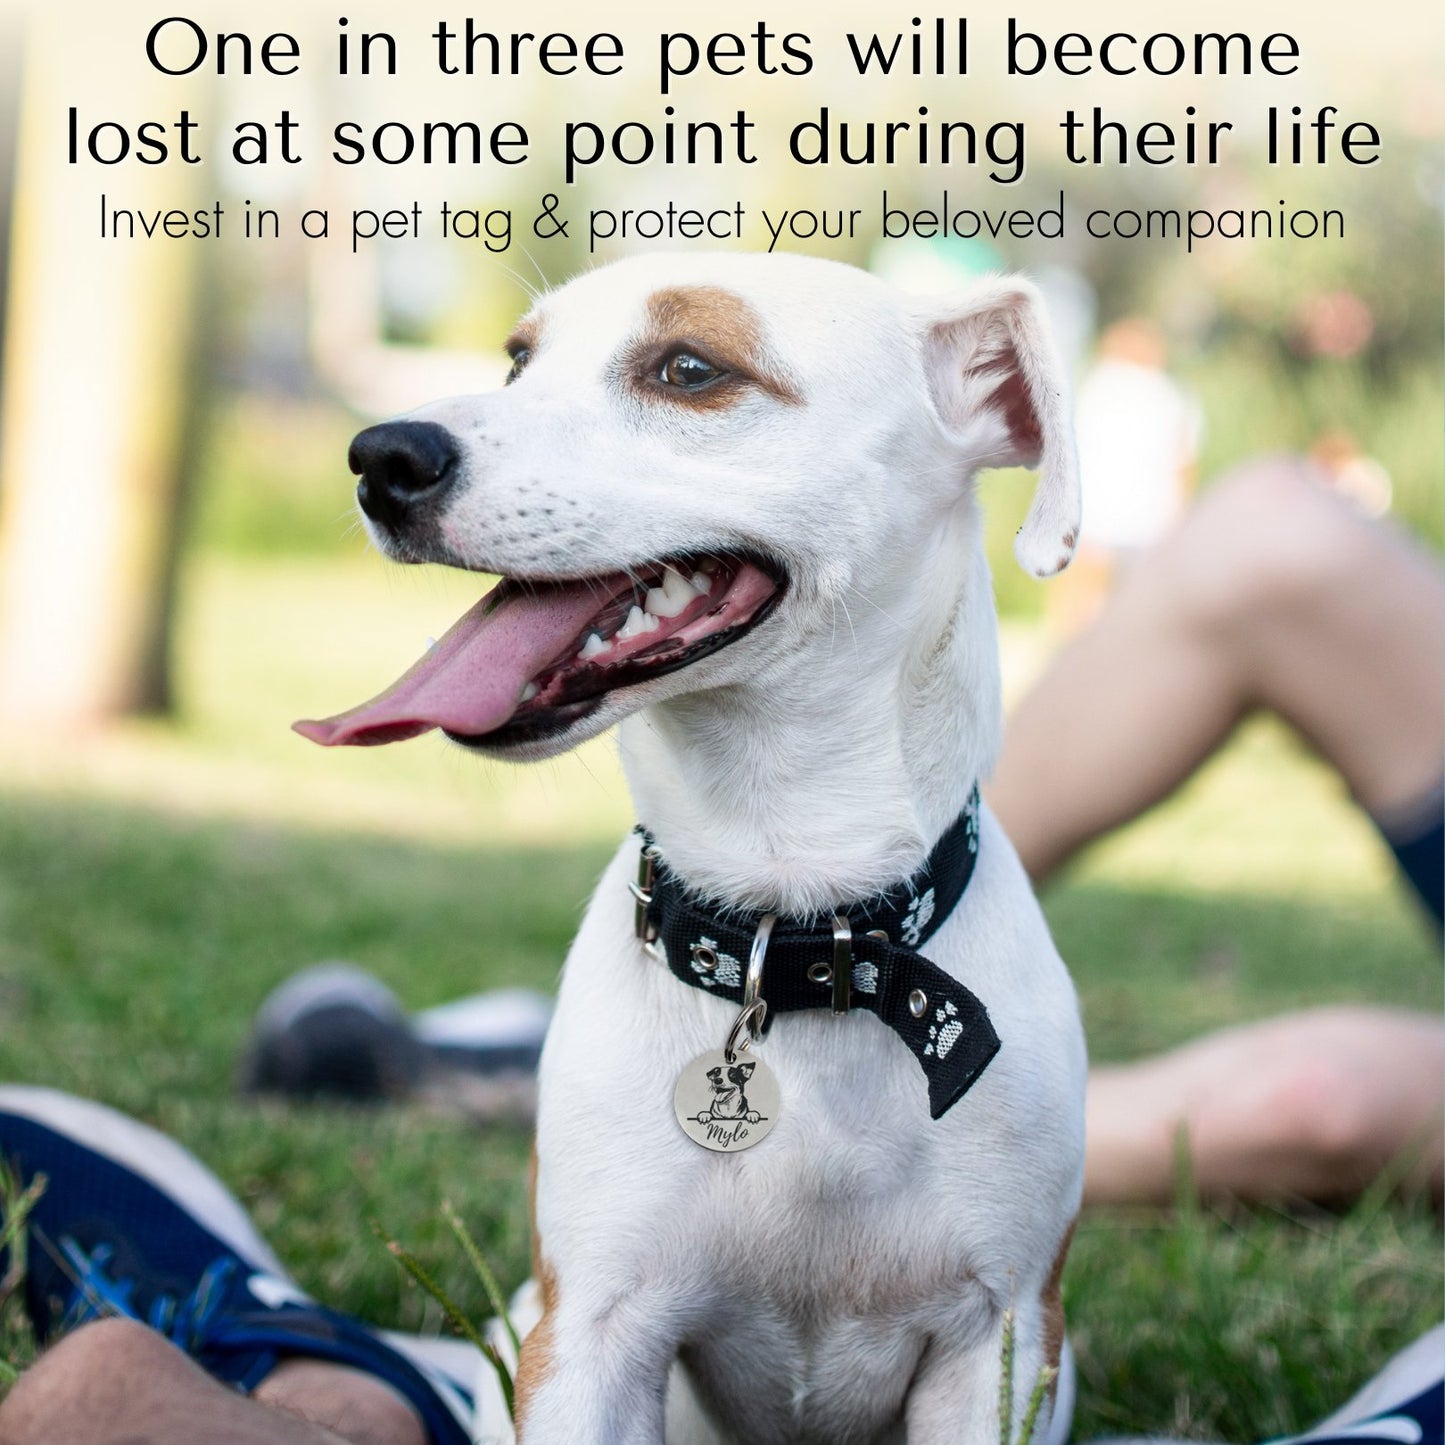 Breed Dog Tag - Personalized Breed Dog Tag (Beagle)